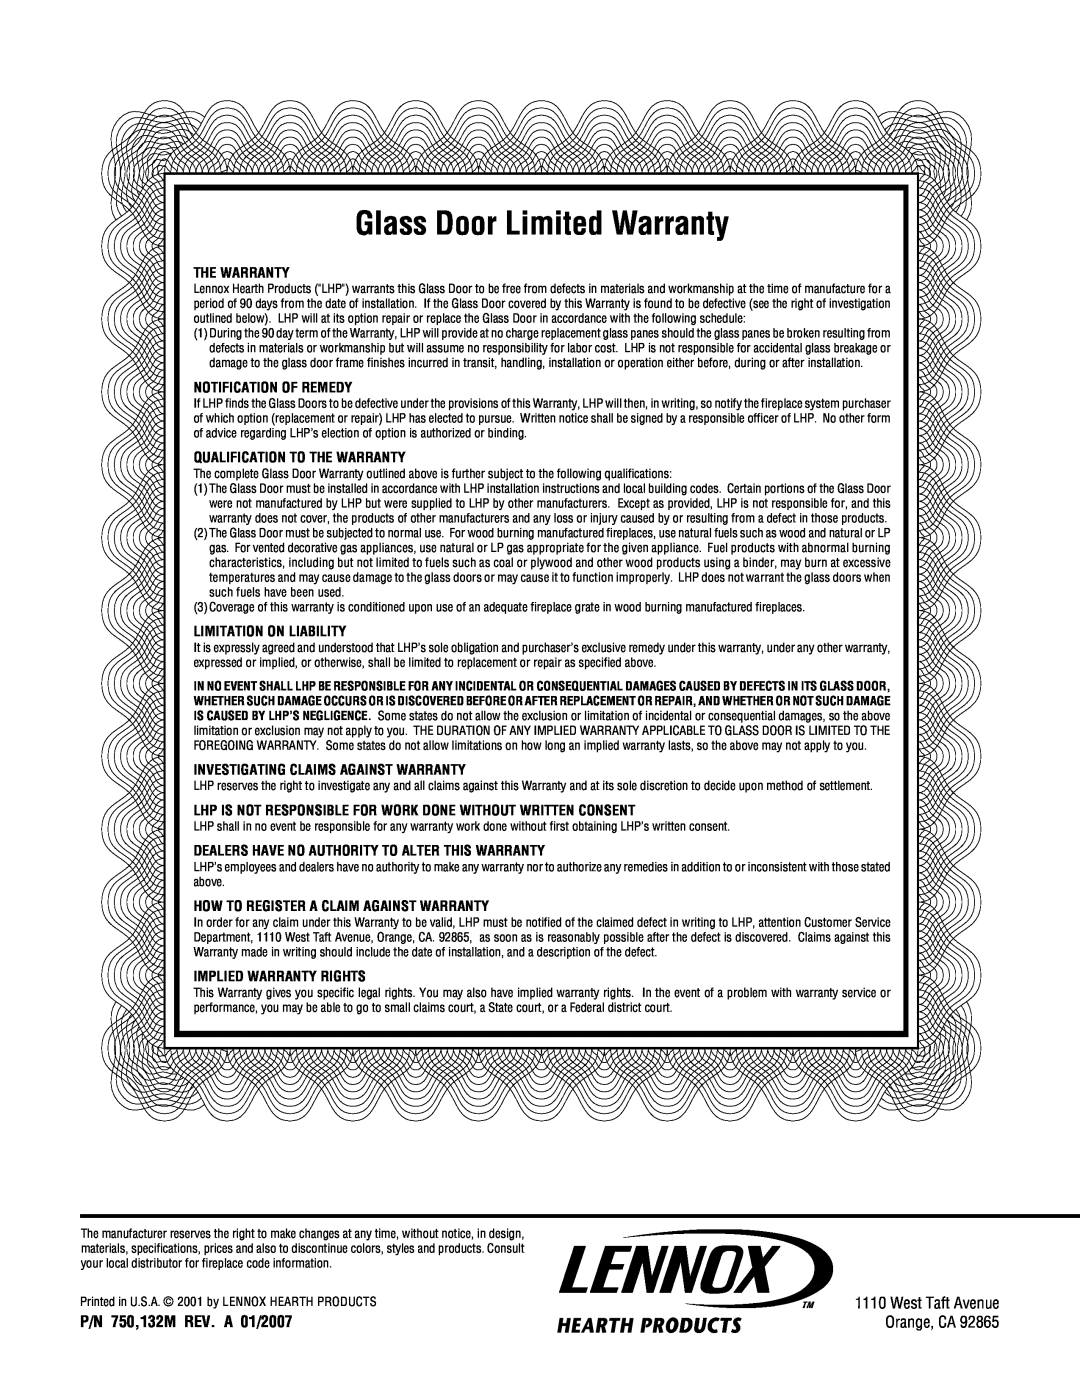 Lennox Hearth 38AEP-BB P/N 750,132M REV. A 01/2007, Glass Door Limited Warranty, The Warranty, Notification Of Remedy 